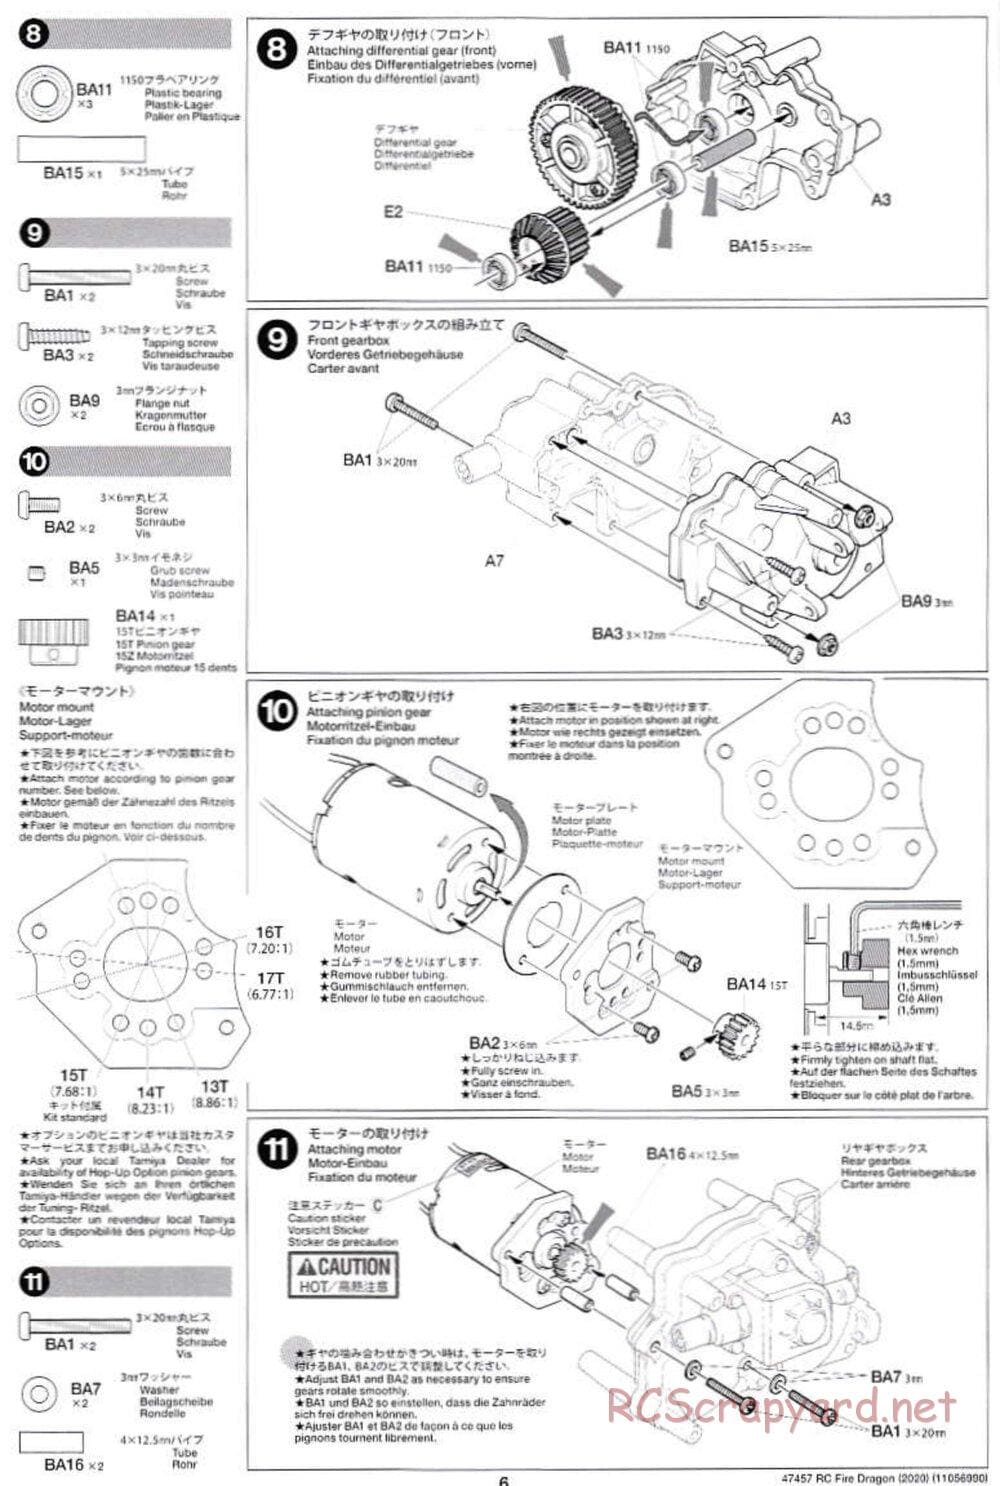 Tamiya - Fire Dragon (2020) Chassis - Manual - Page 6